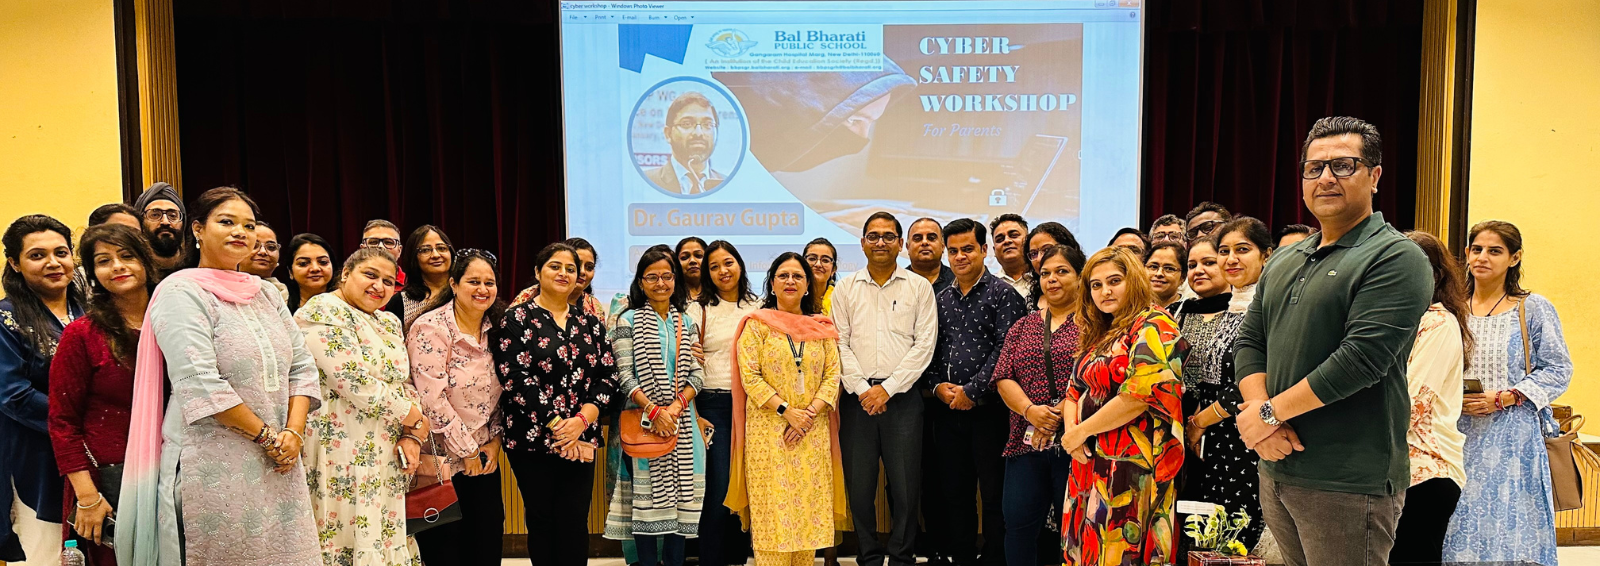 Cyber Safety Workshop For Parents